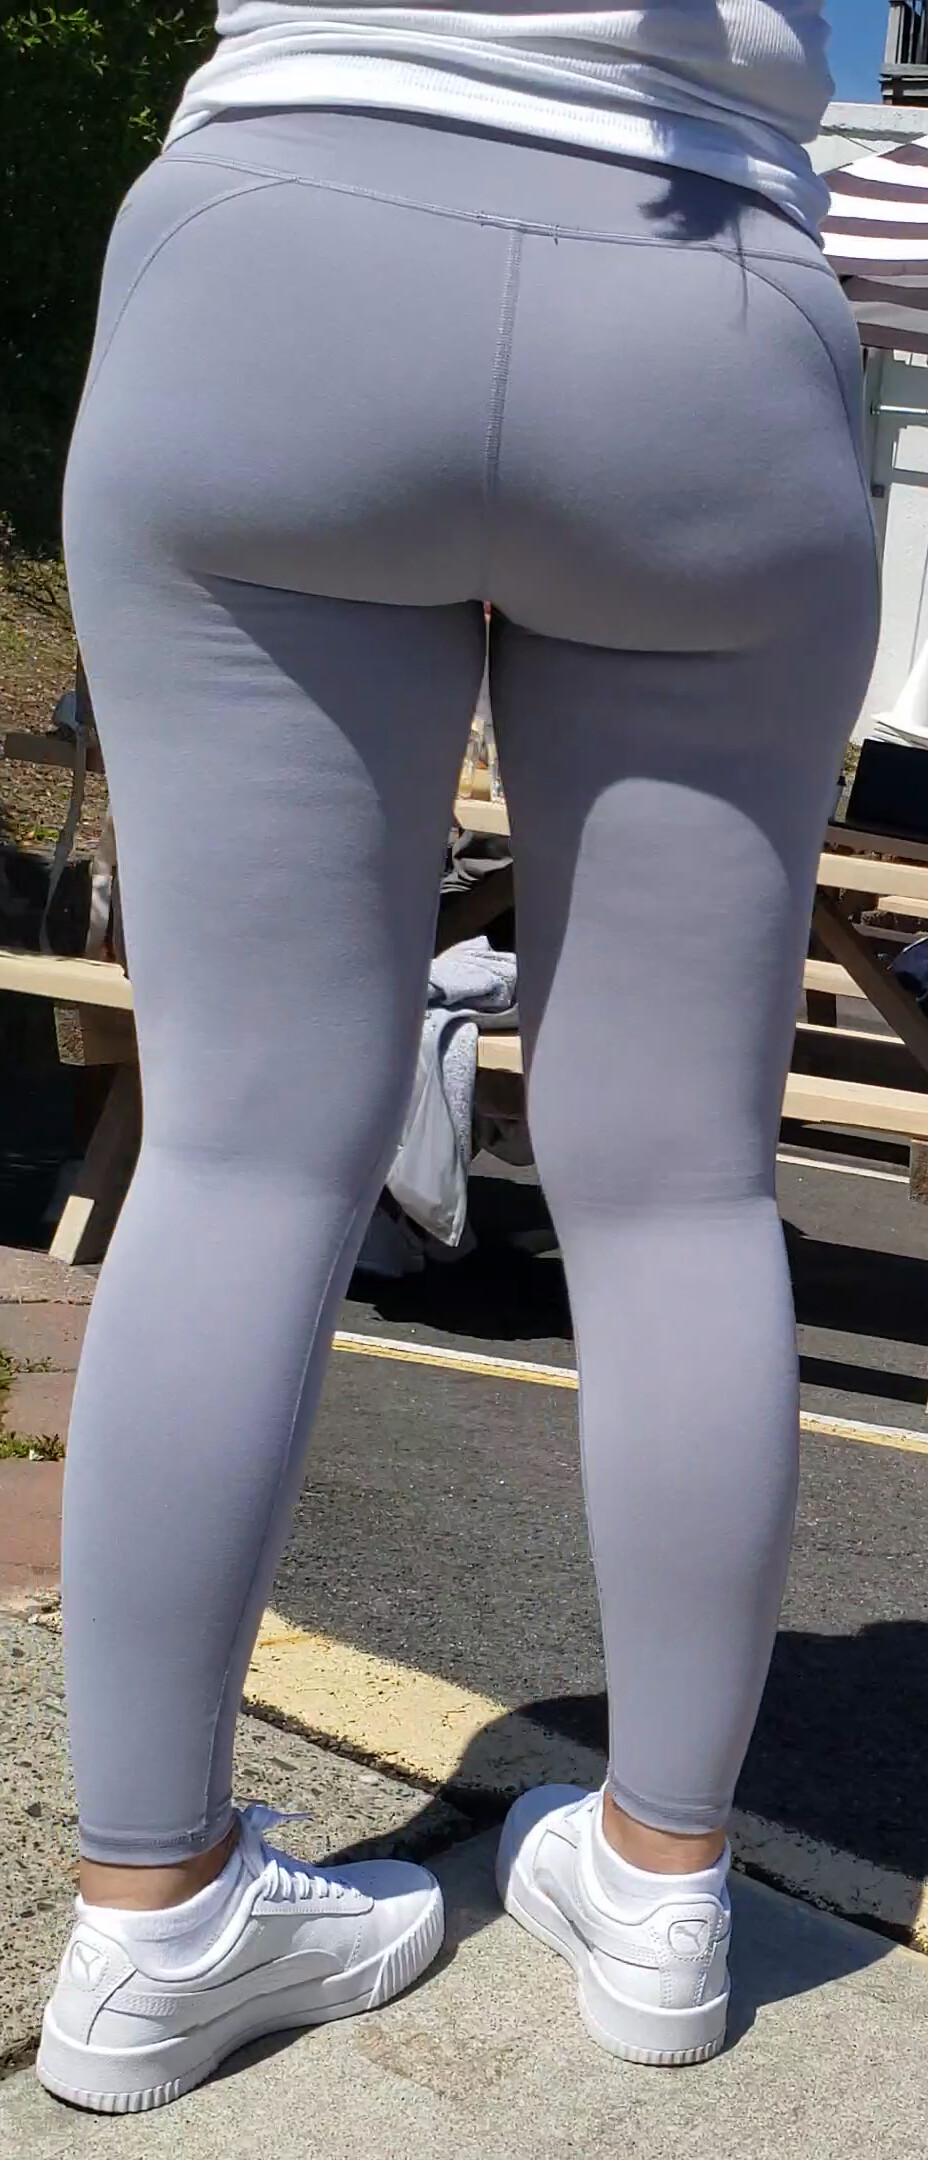 nice ass inblue spandex